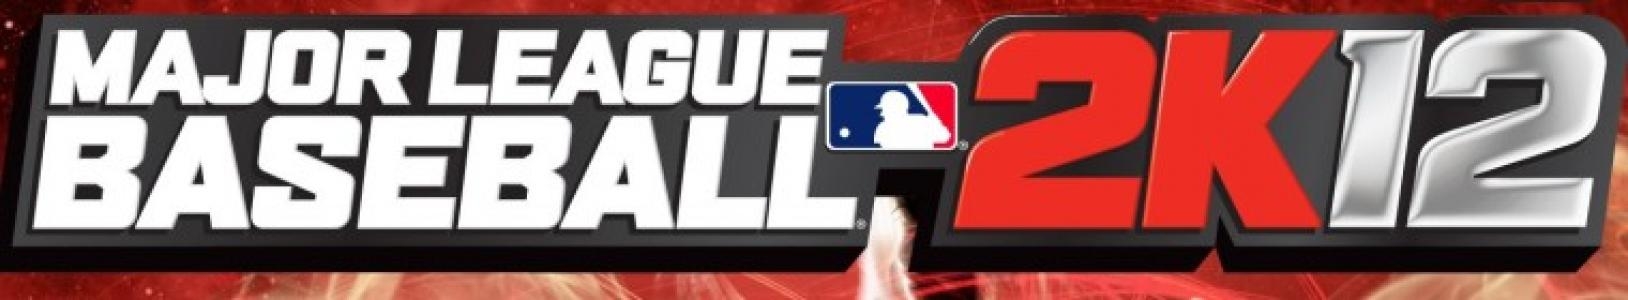 Major League Baseball 2K12 banner